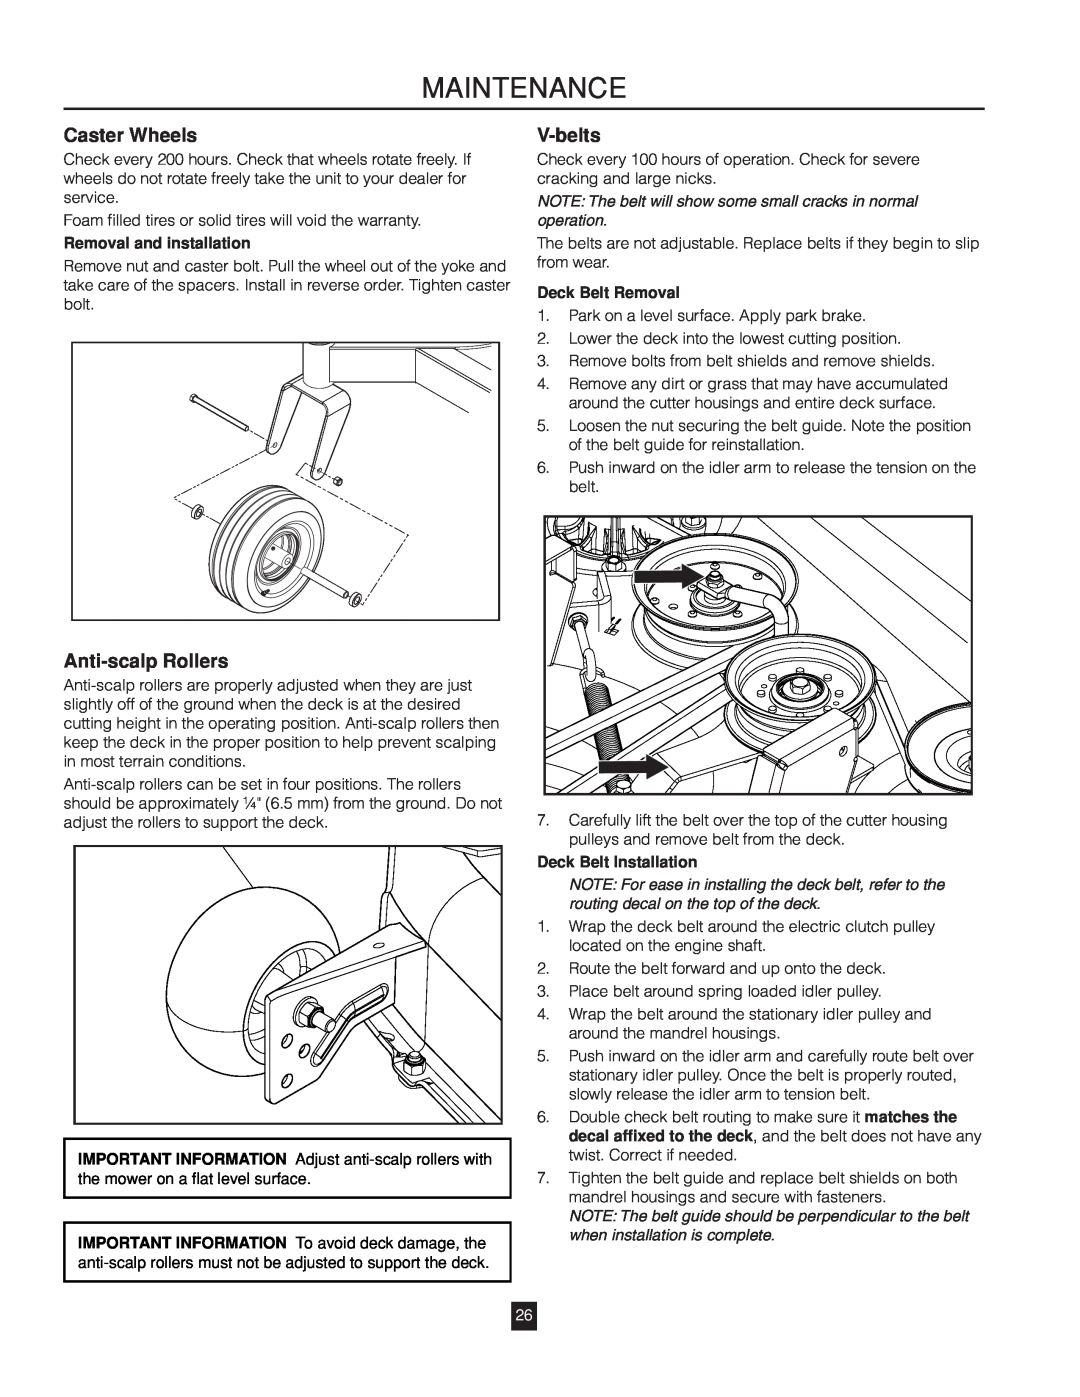 Husqvarna RZ46215 Caster Wheels, V-belts, Anti-scalp Rollers, Maintenance, Removal and installation, Deck Belt Removal 